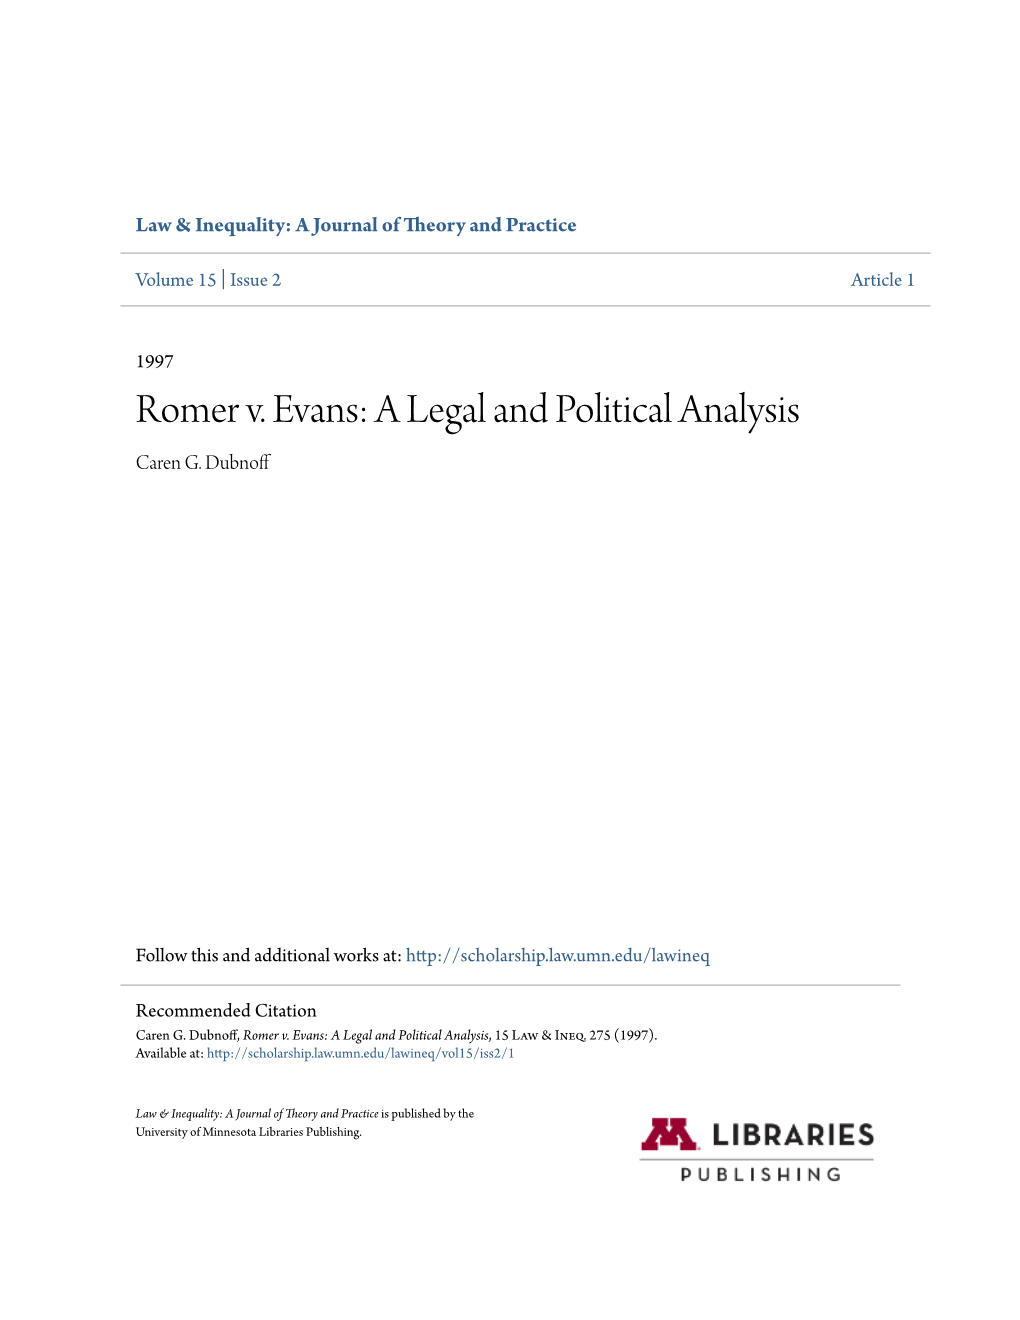 Romer V. Evans: a Legal and Political Analysis Caren G